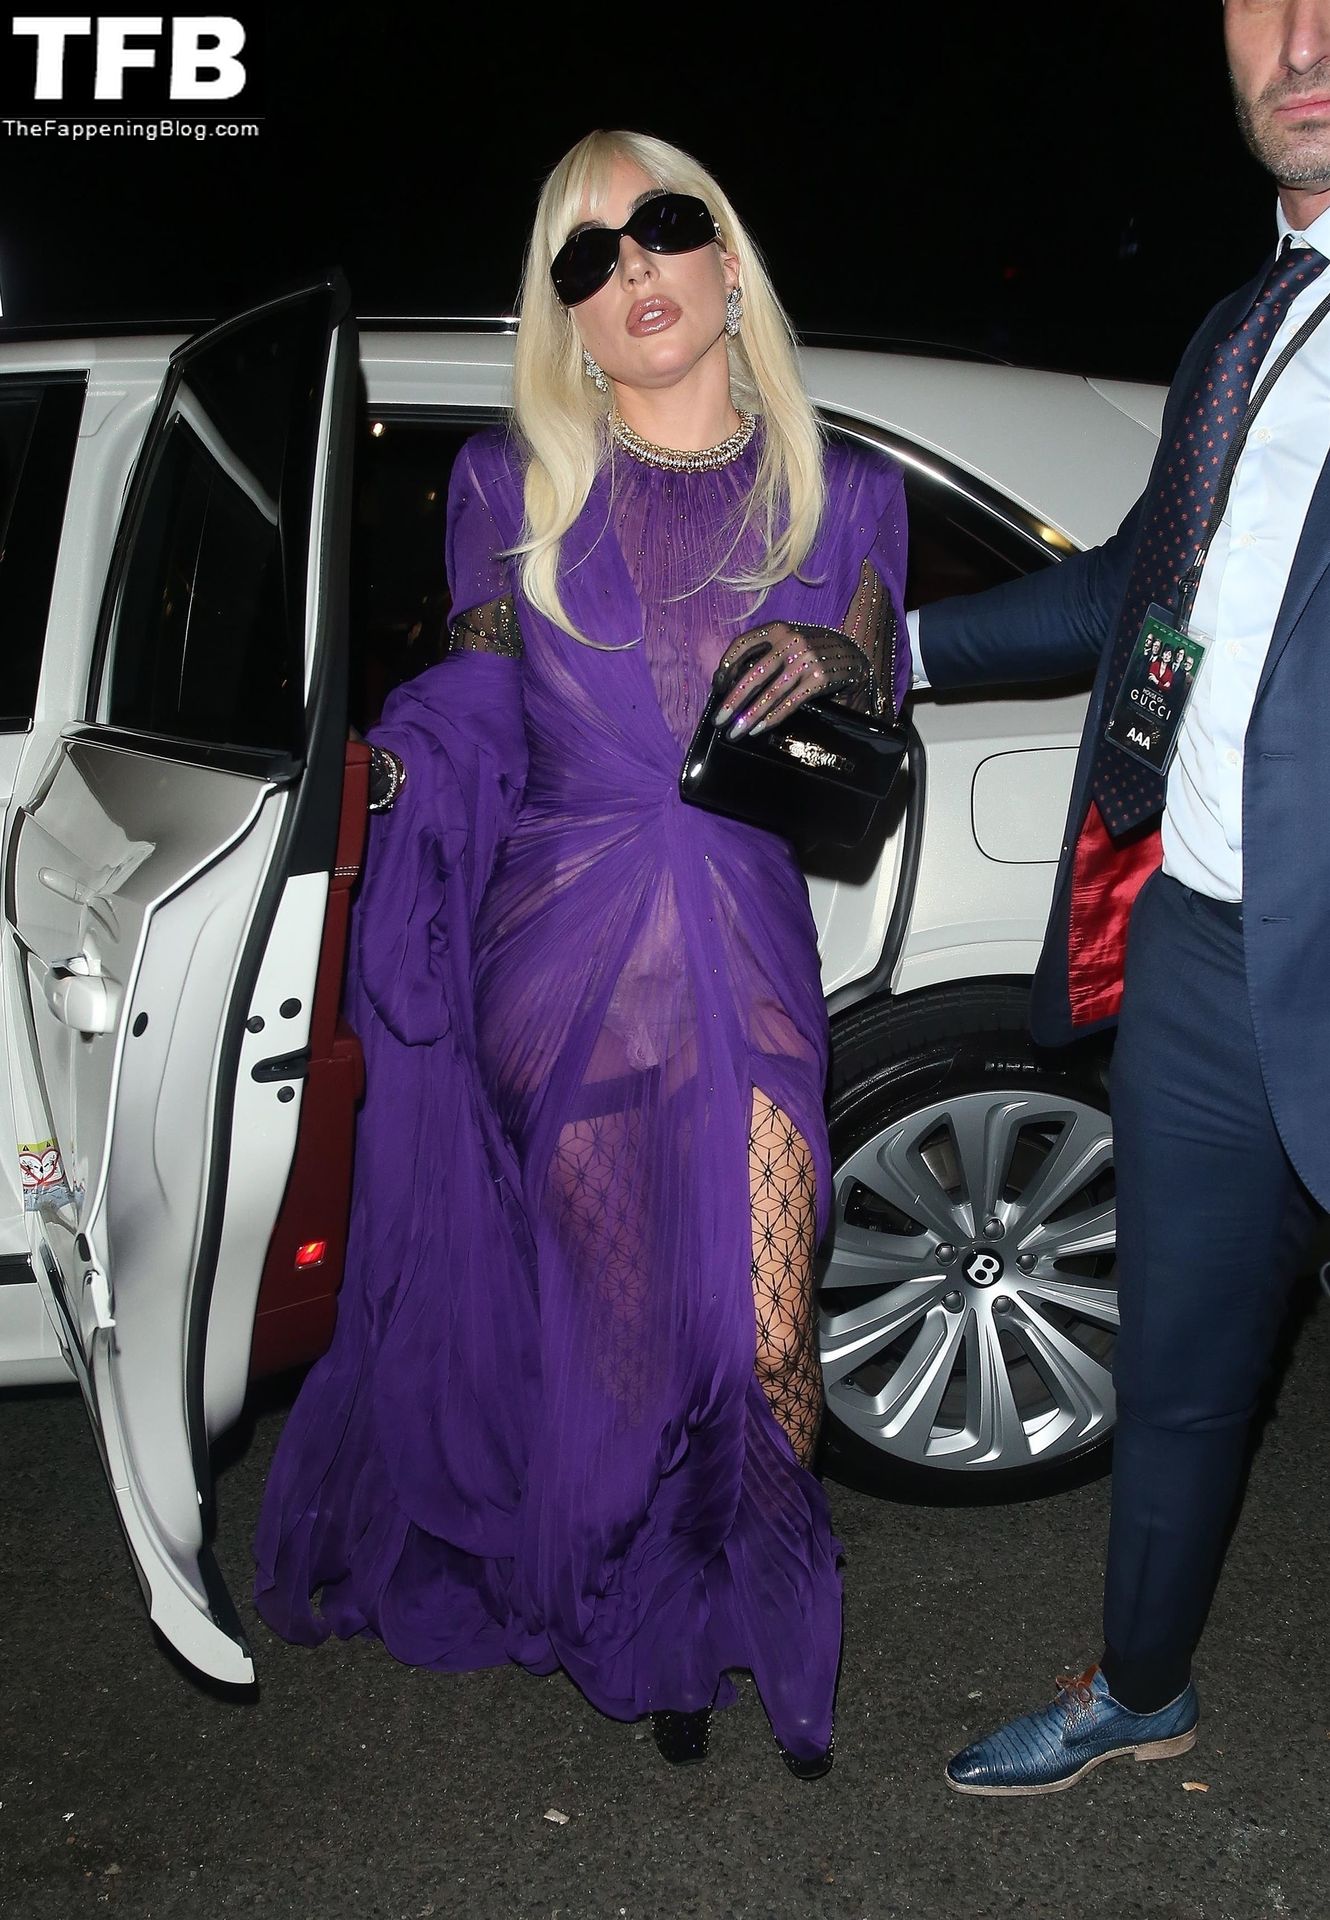 Lady-Gaga-Sexy-The-Fappening-Blog-28.jpg